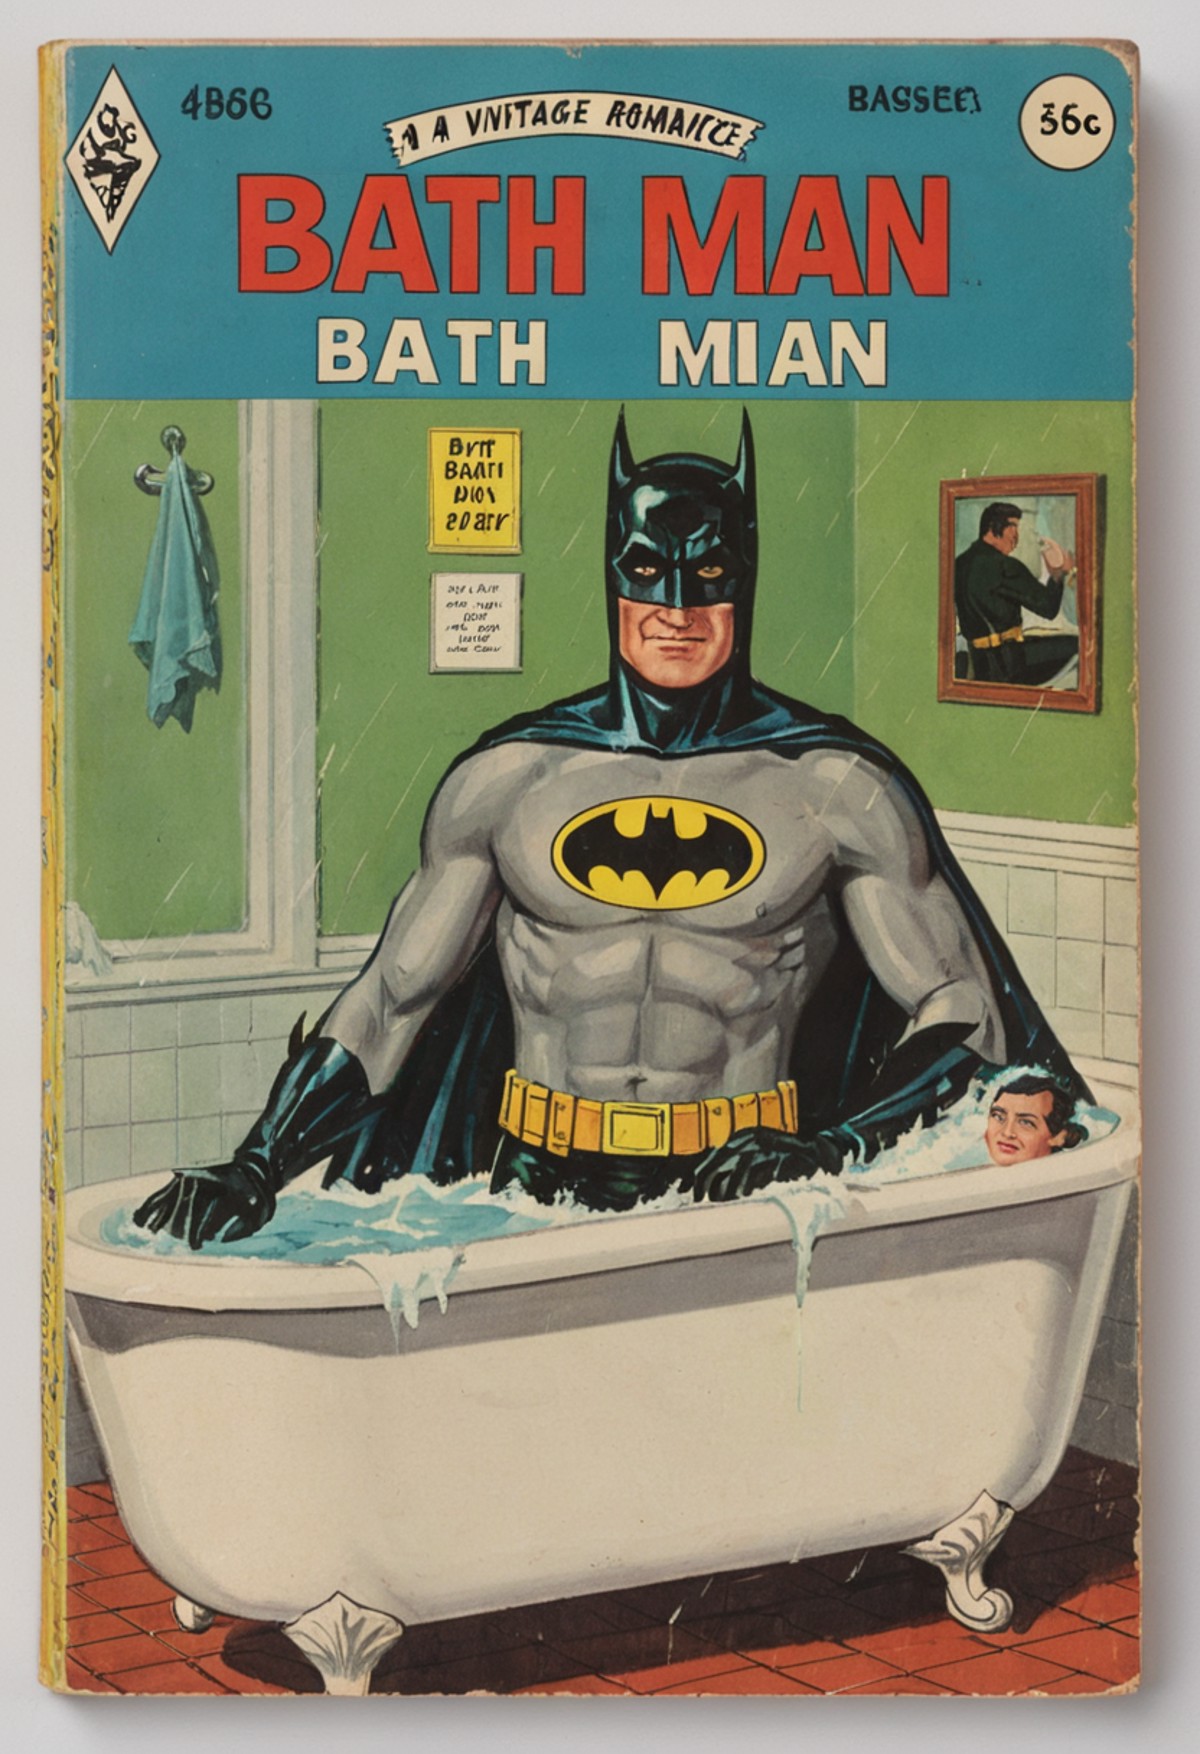 book cover of a vintage romance novel called "bath man" depicting (batman) in a bath tub